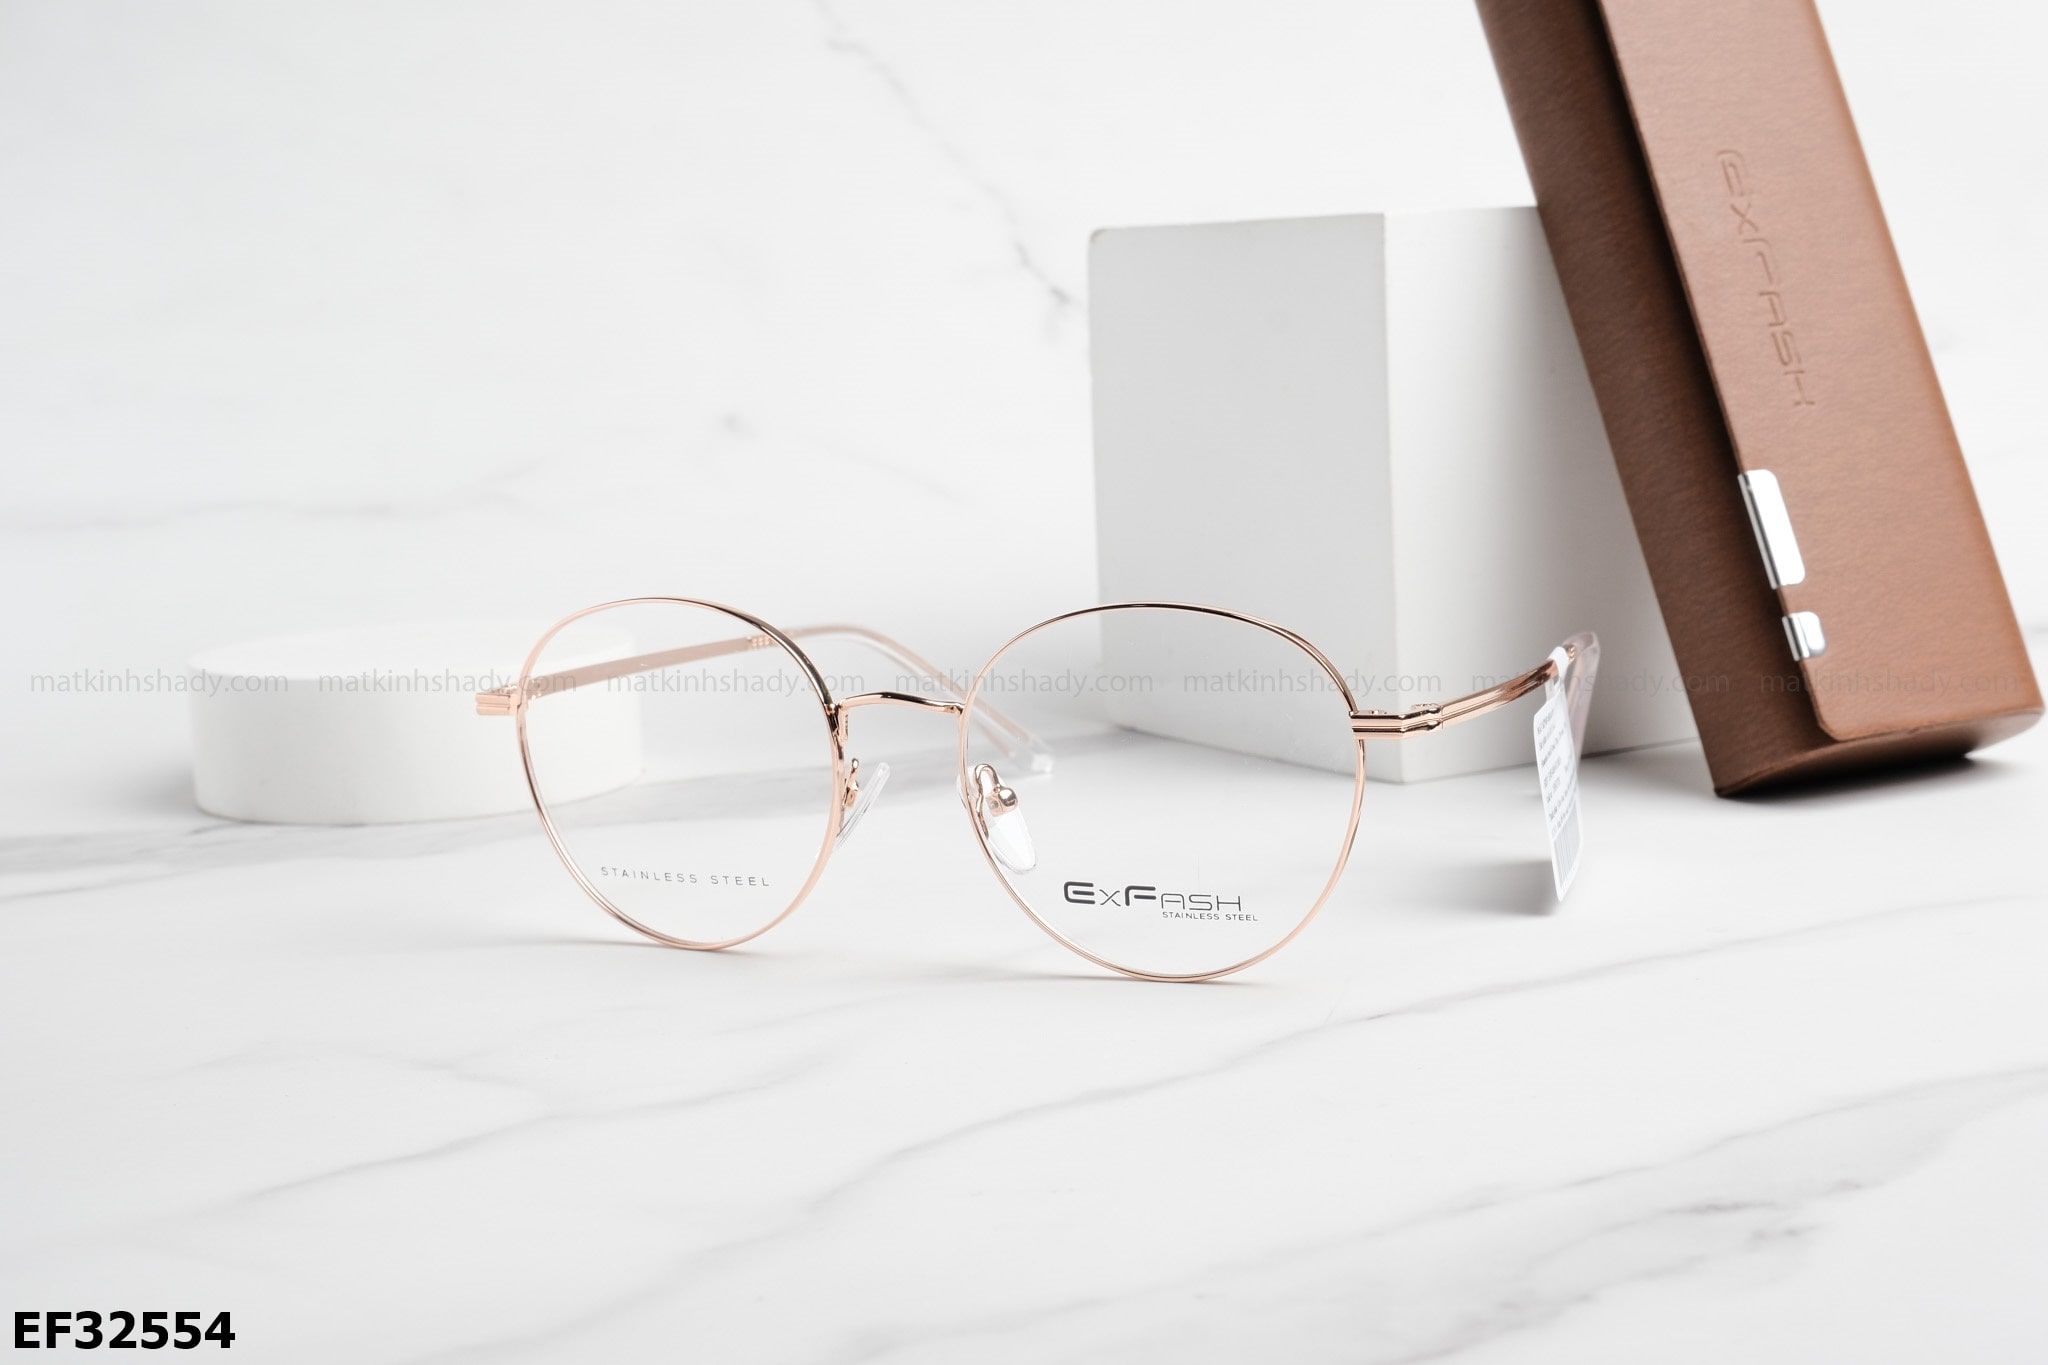  Exfash Eyewear - Glasses - EF32554 